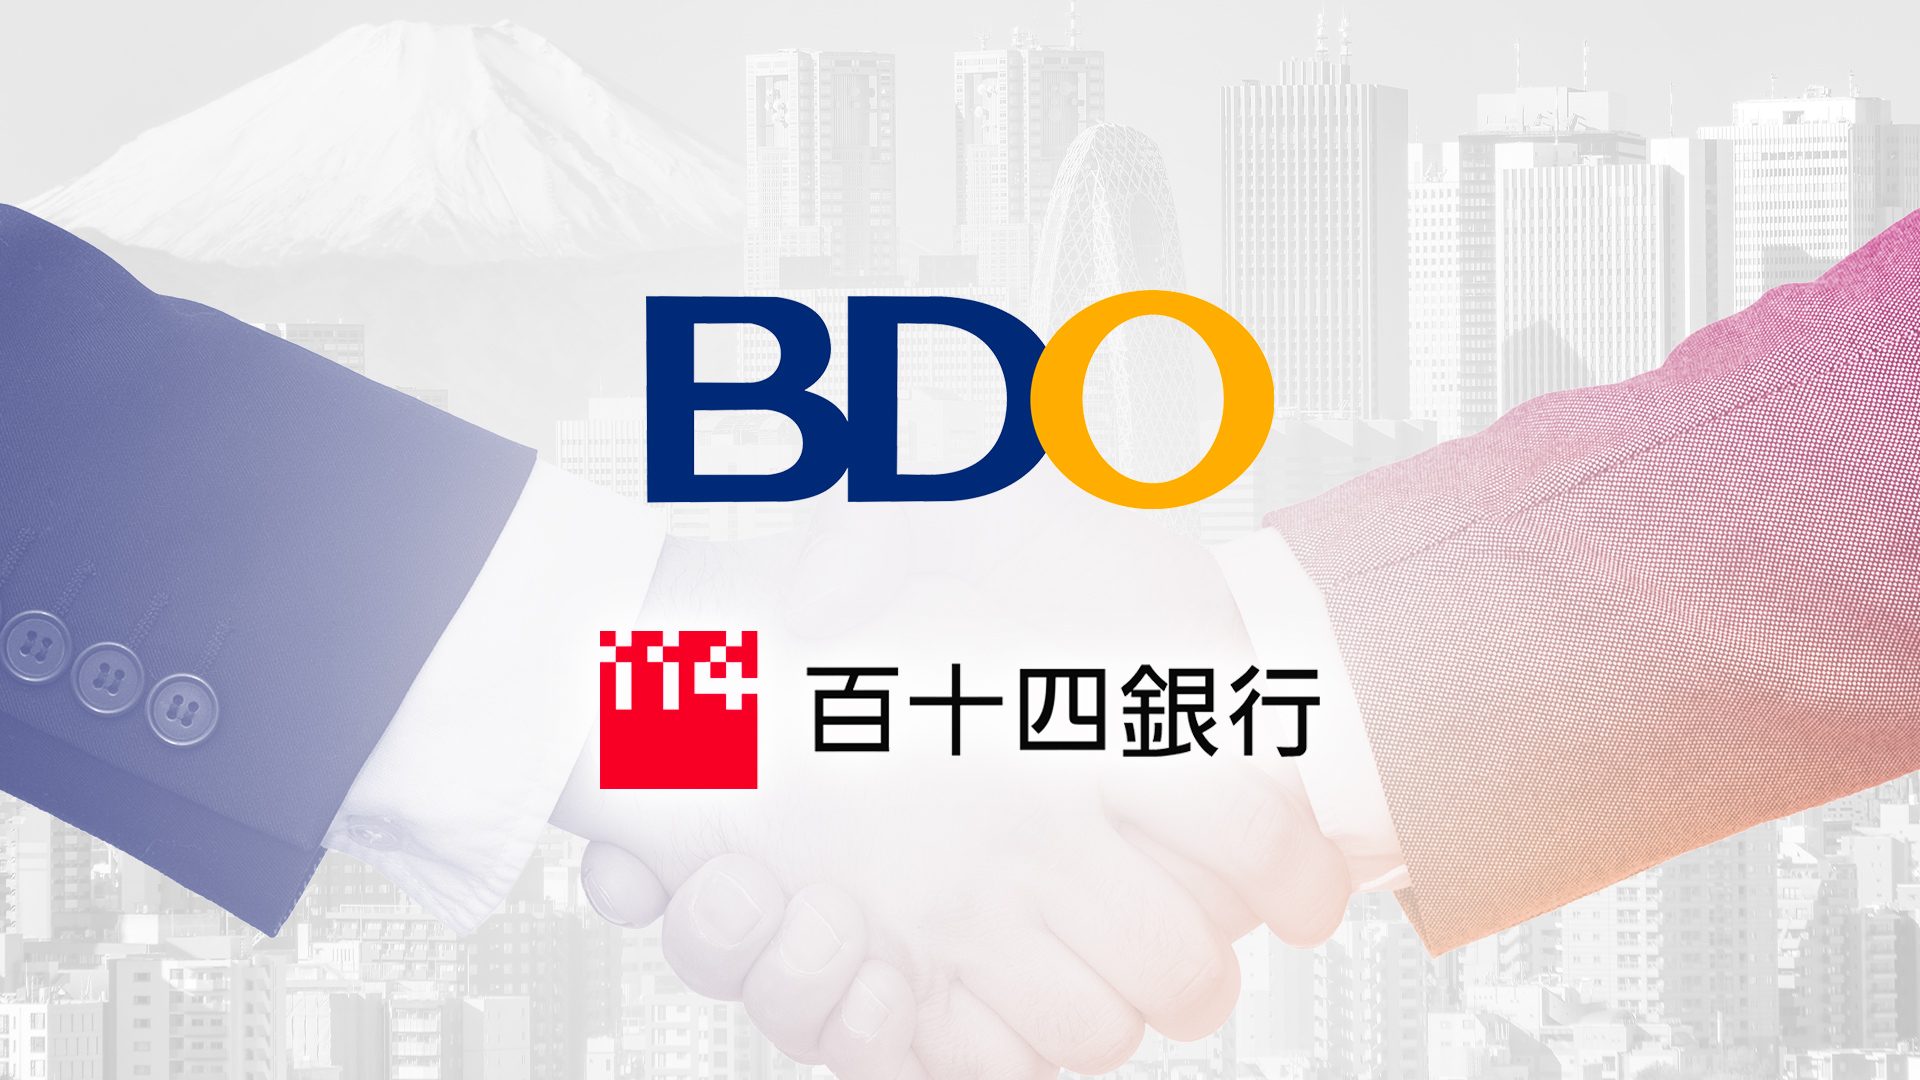 BDO partners with Japan’s Hyakujushi Bank